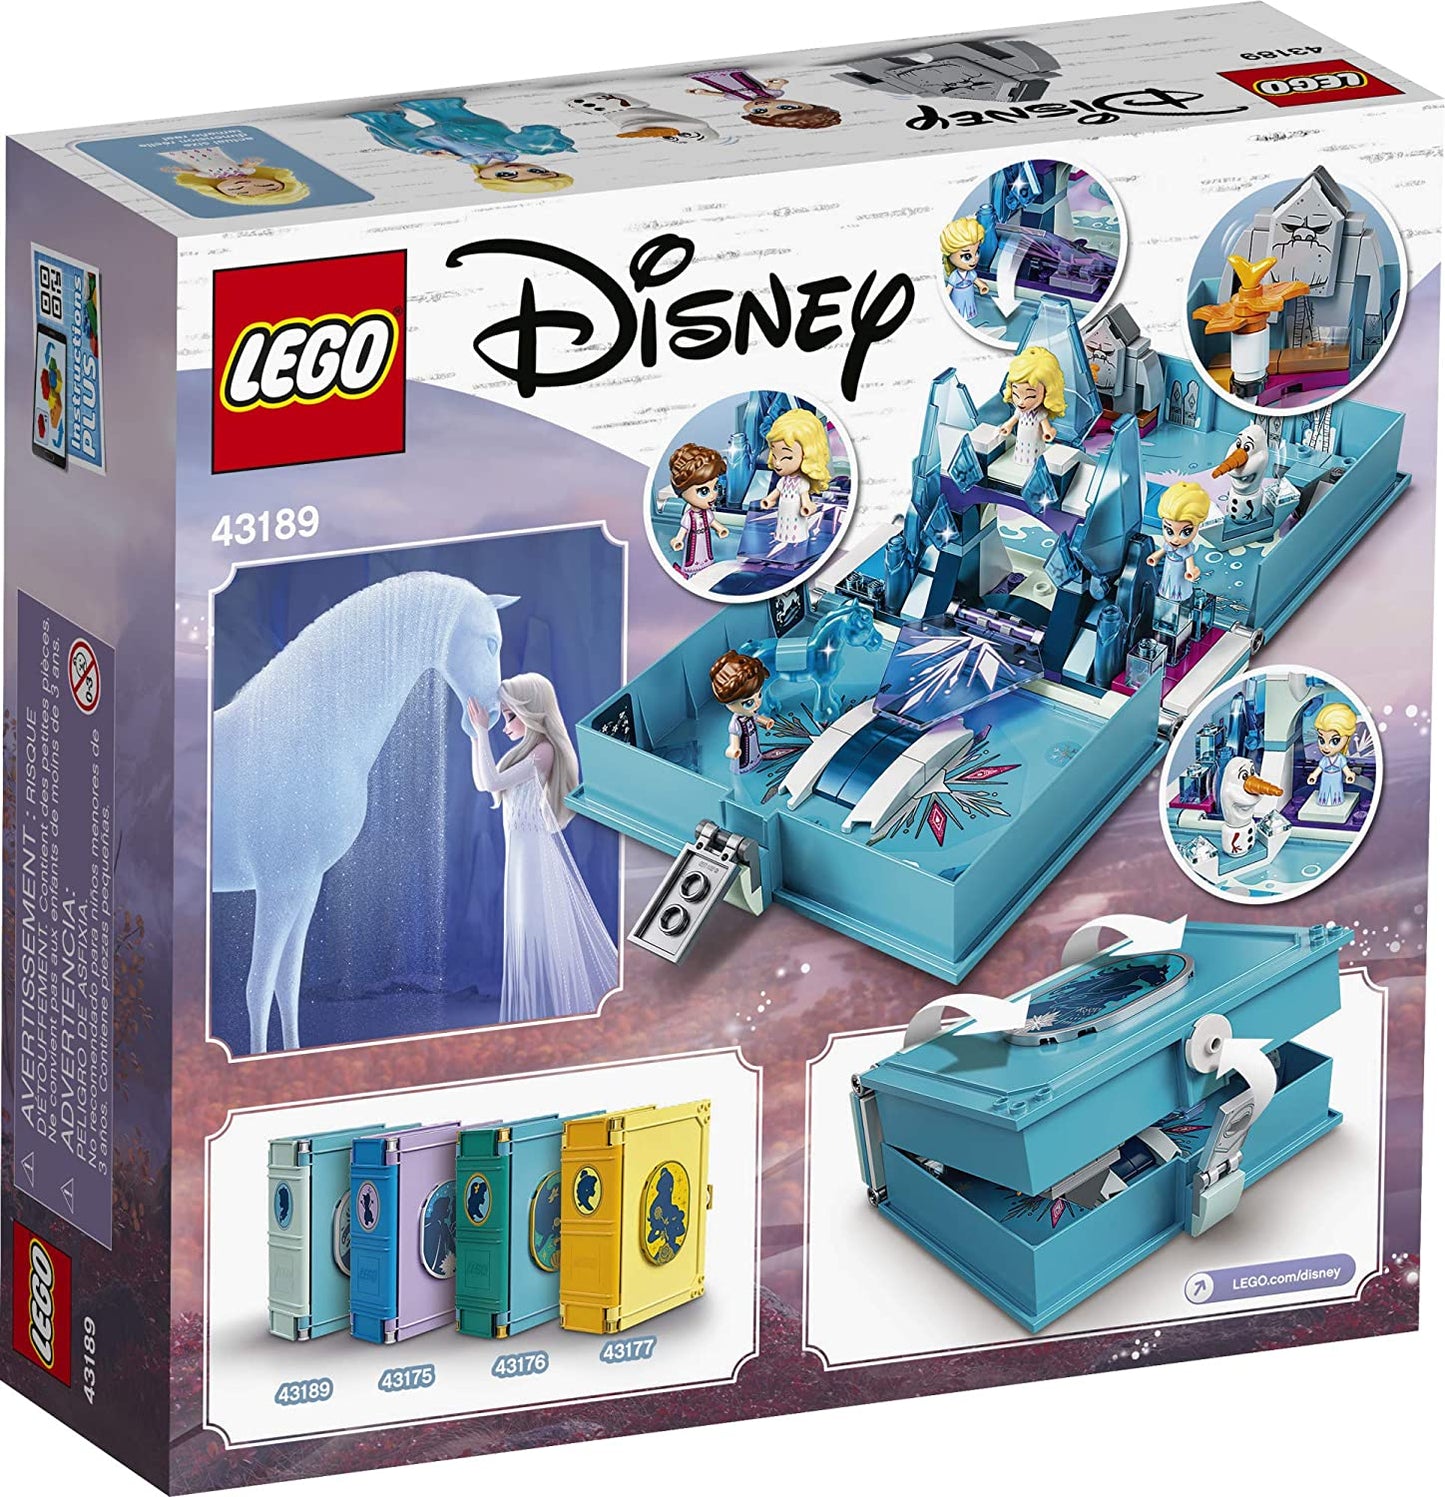 LEGO Disney - Elsa and The Nokk Storybook Adventures 43189